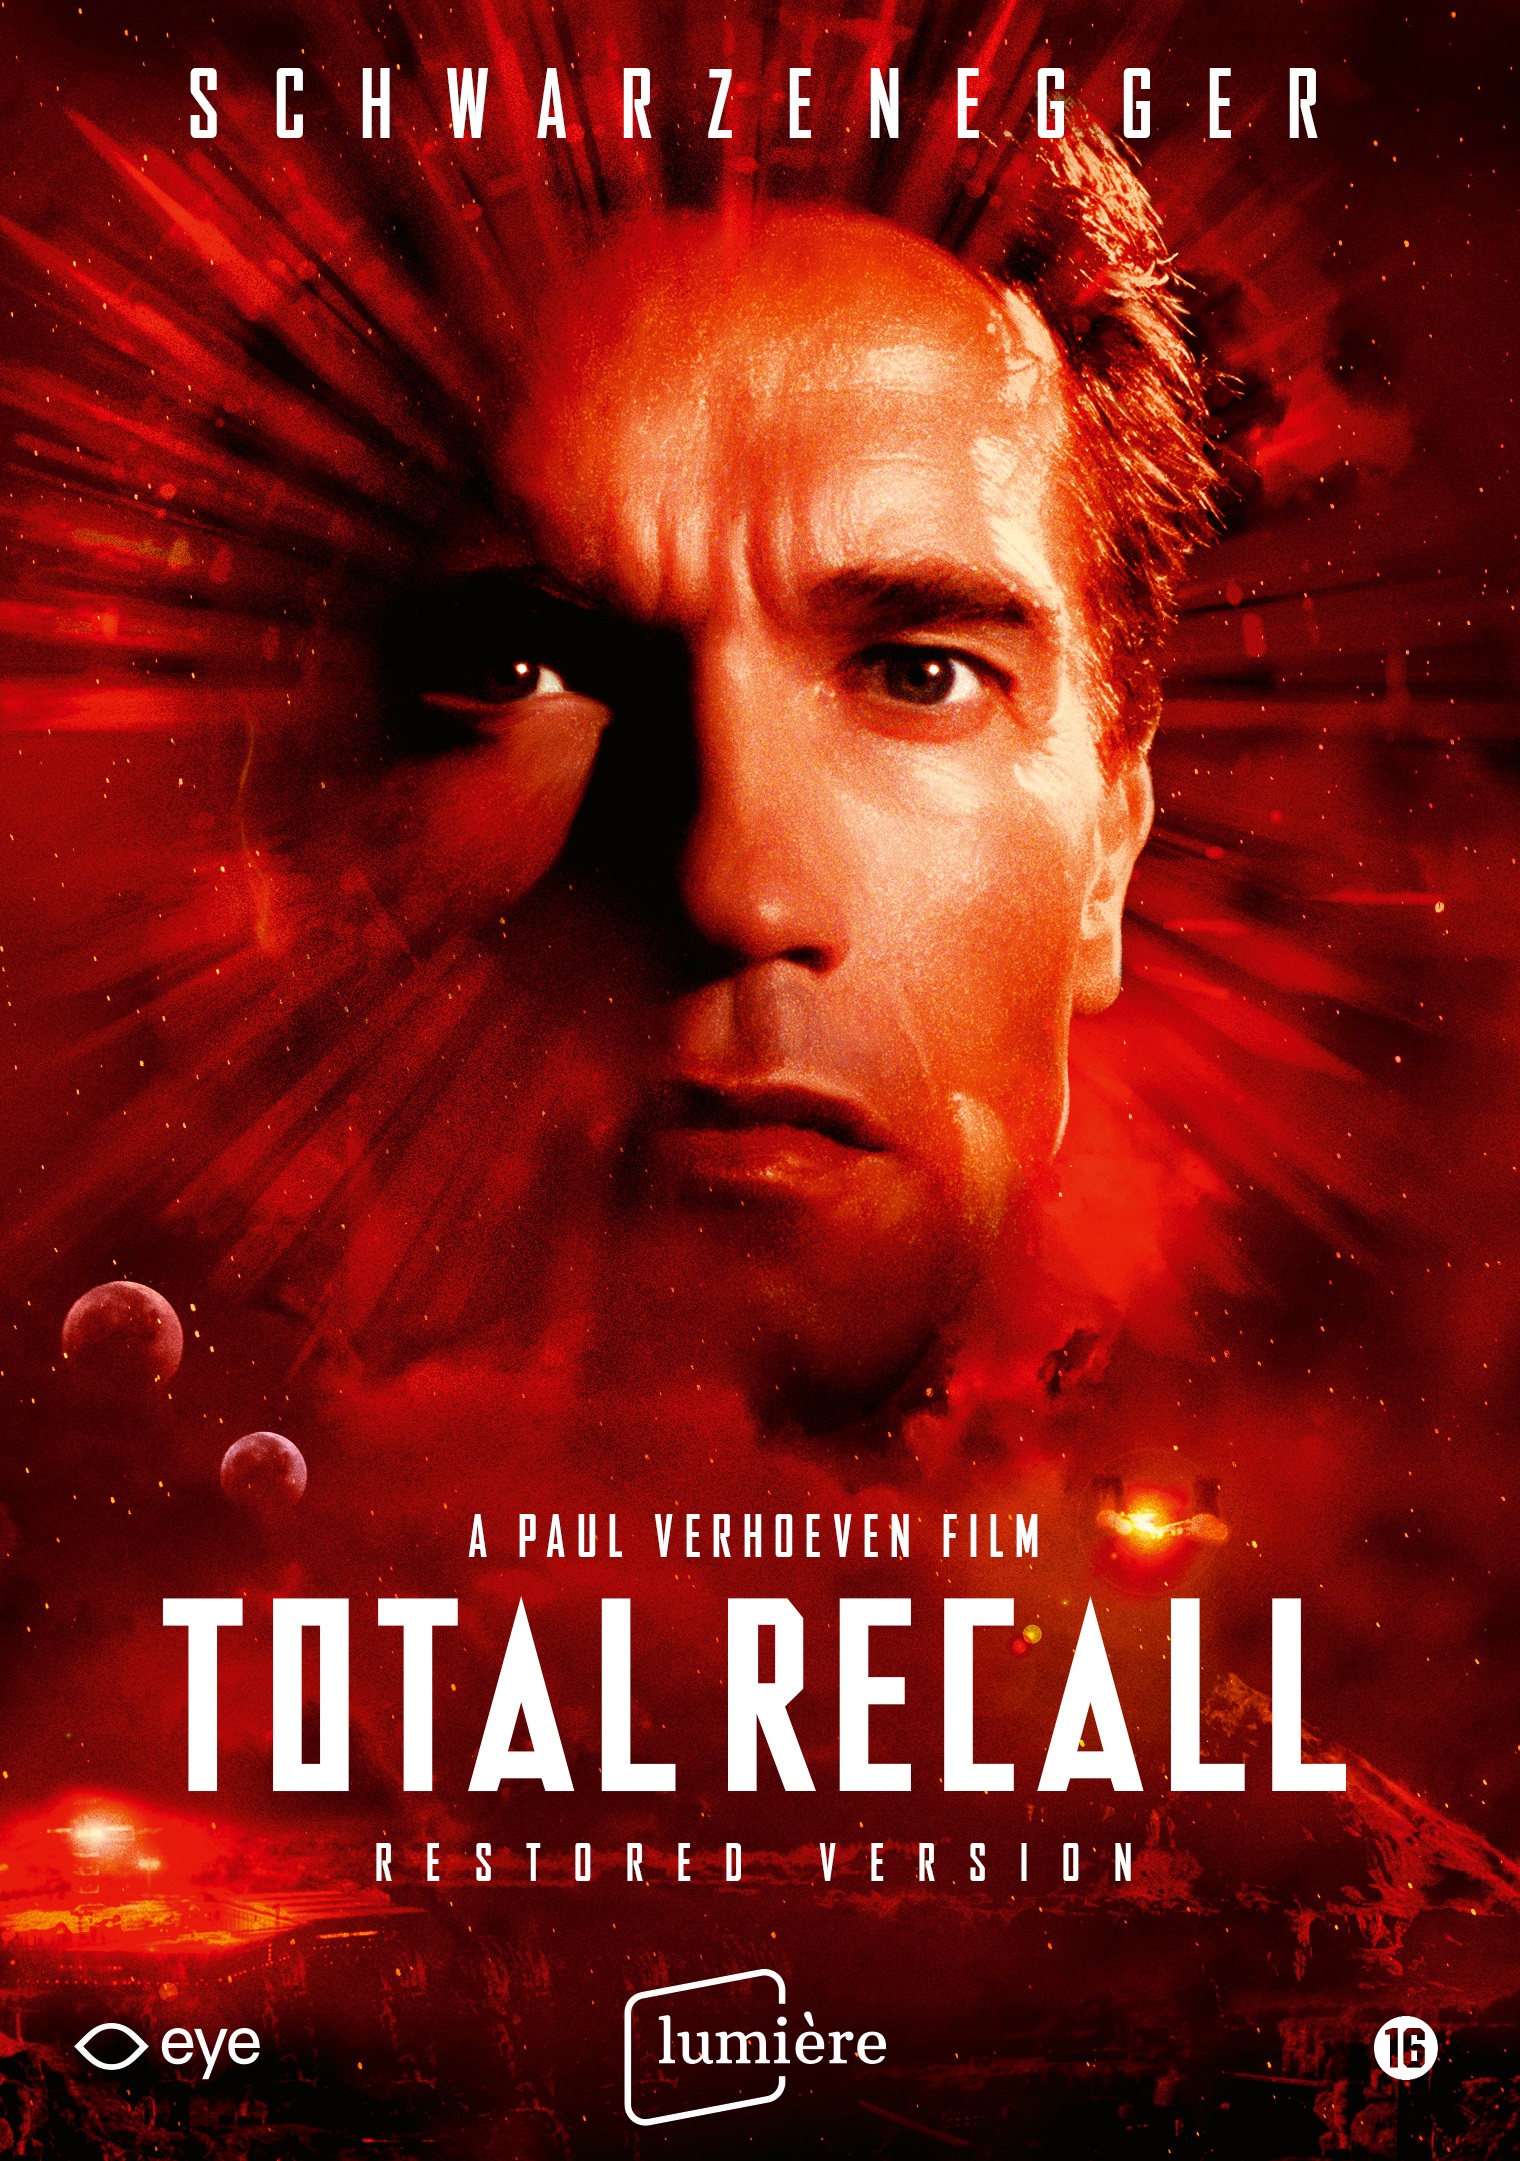 Total Recall – Restored Version